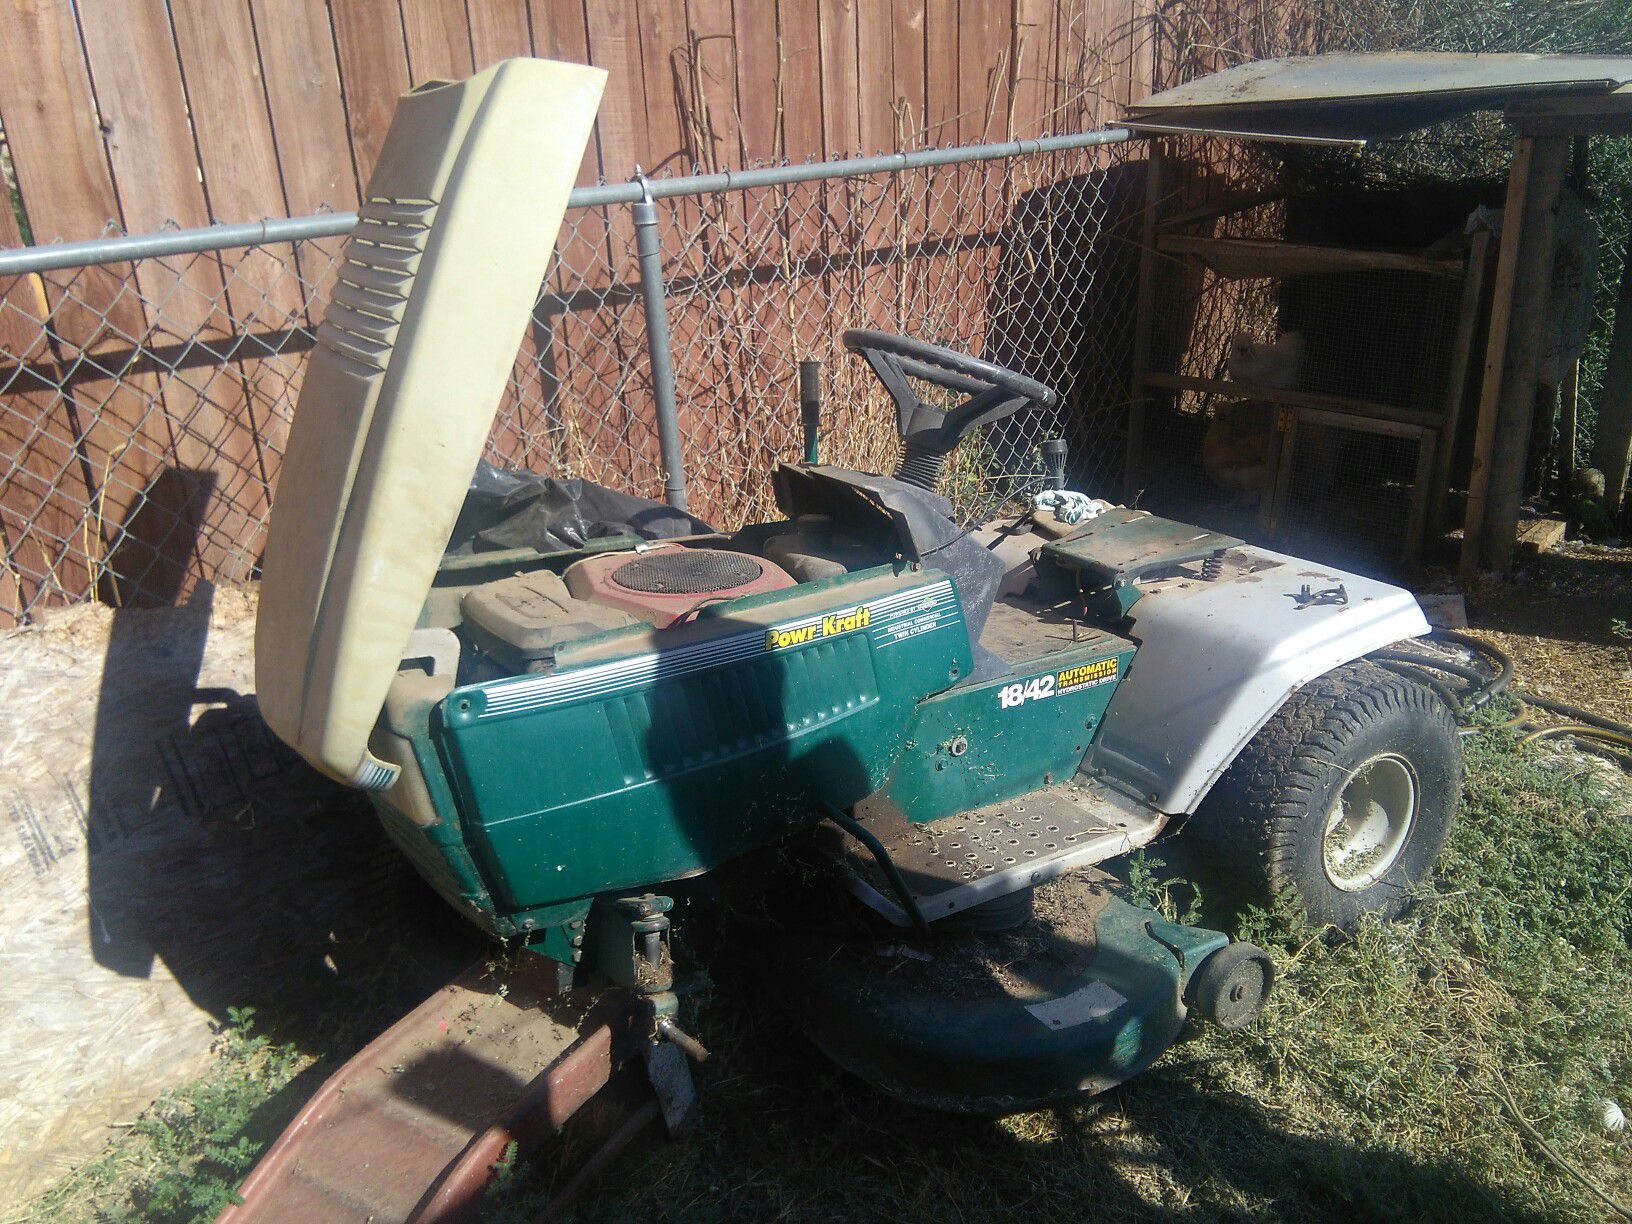 Power Kraft riding lawn mower